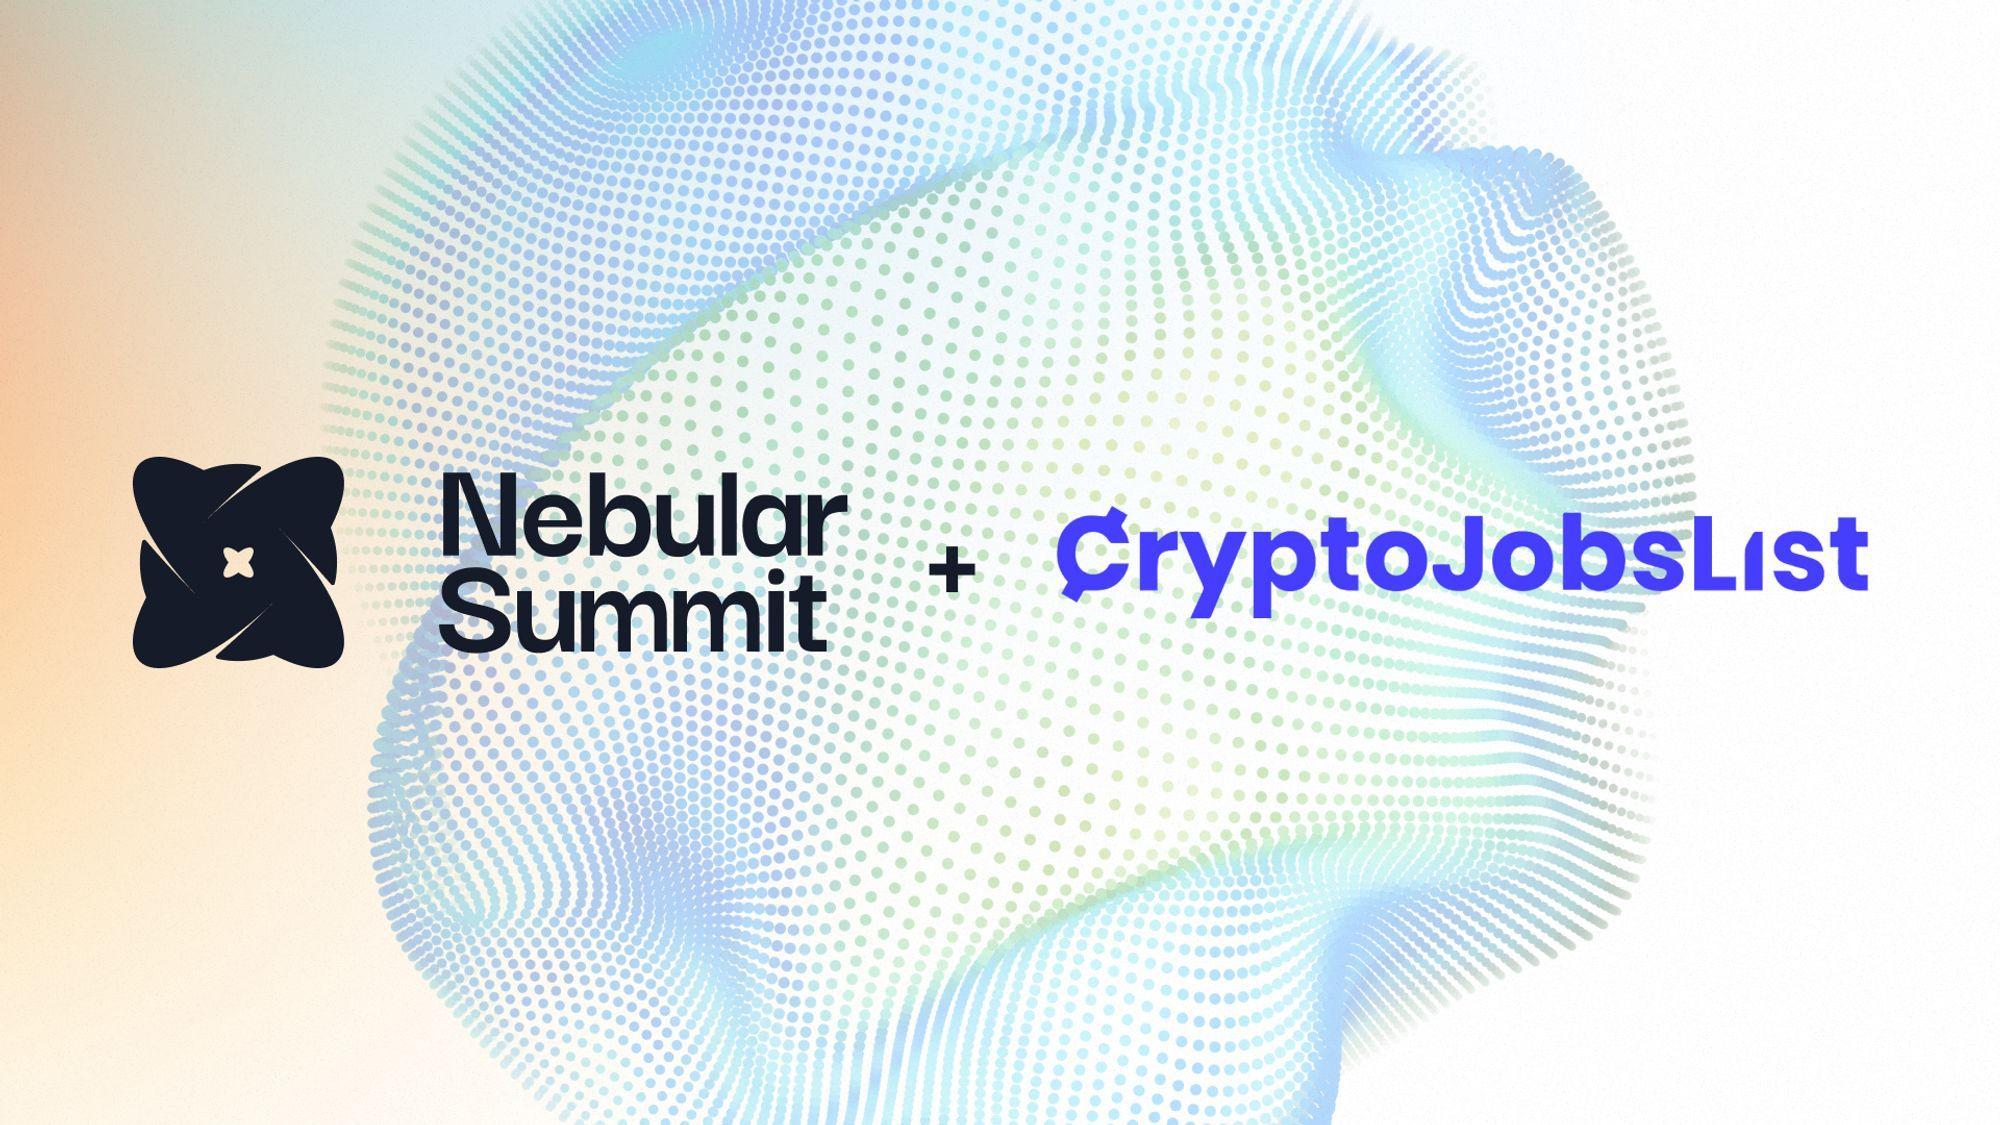 Nebular Summit and Crypto Jobs List.jpg